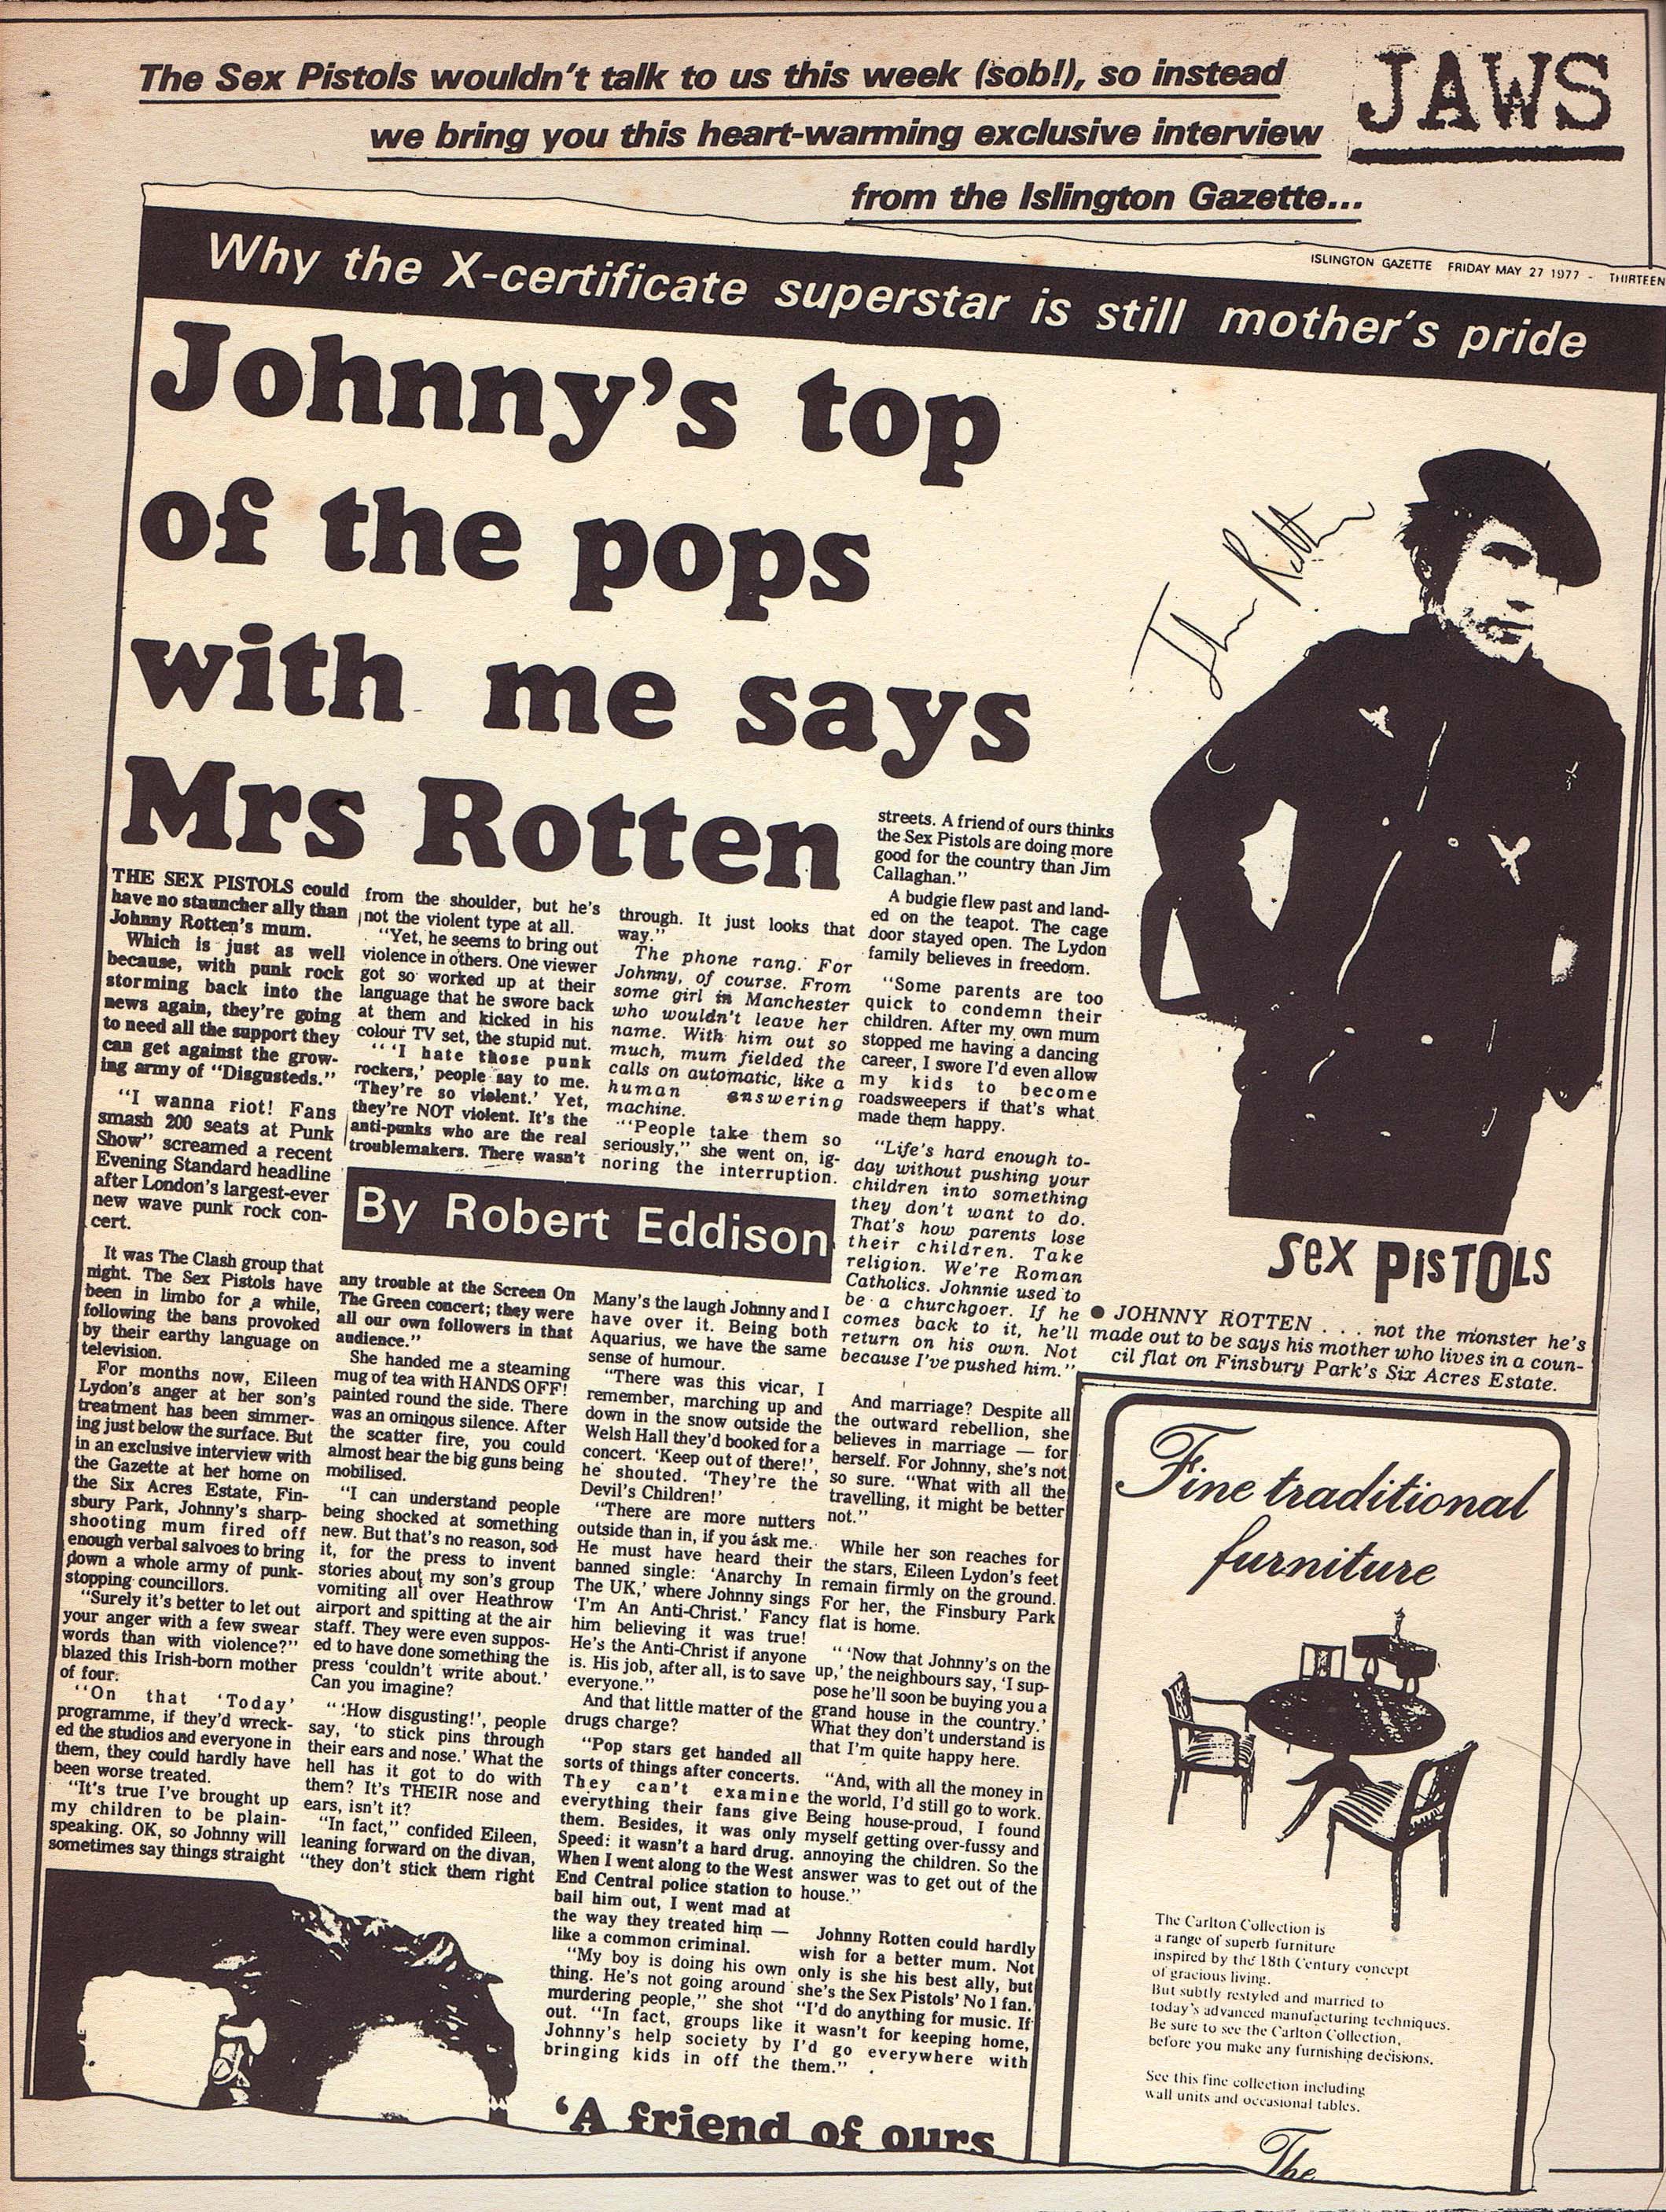 Islington Gazette, May 27th 1977